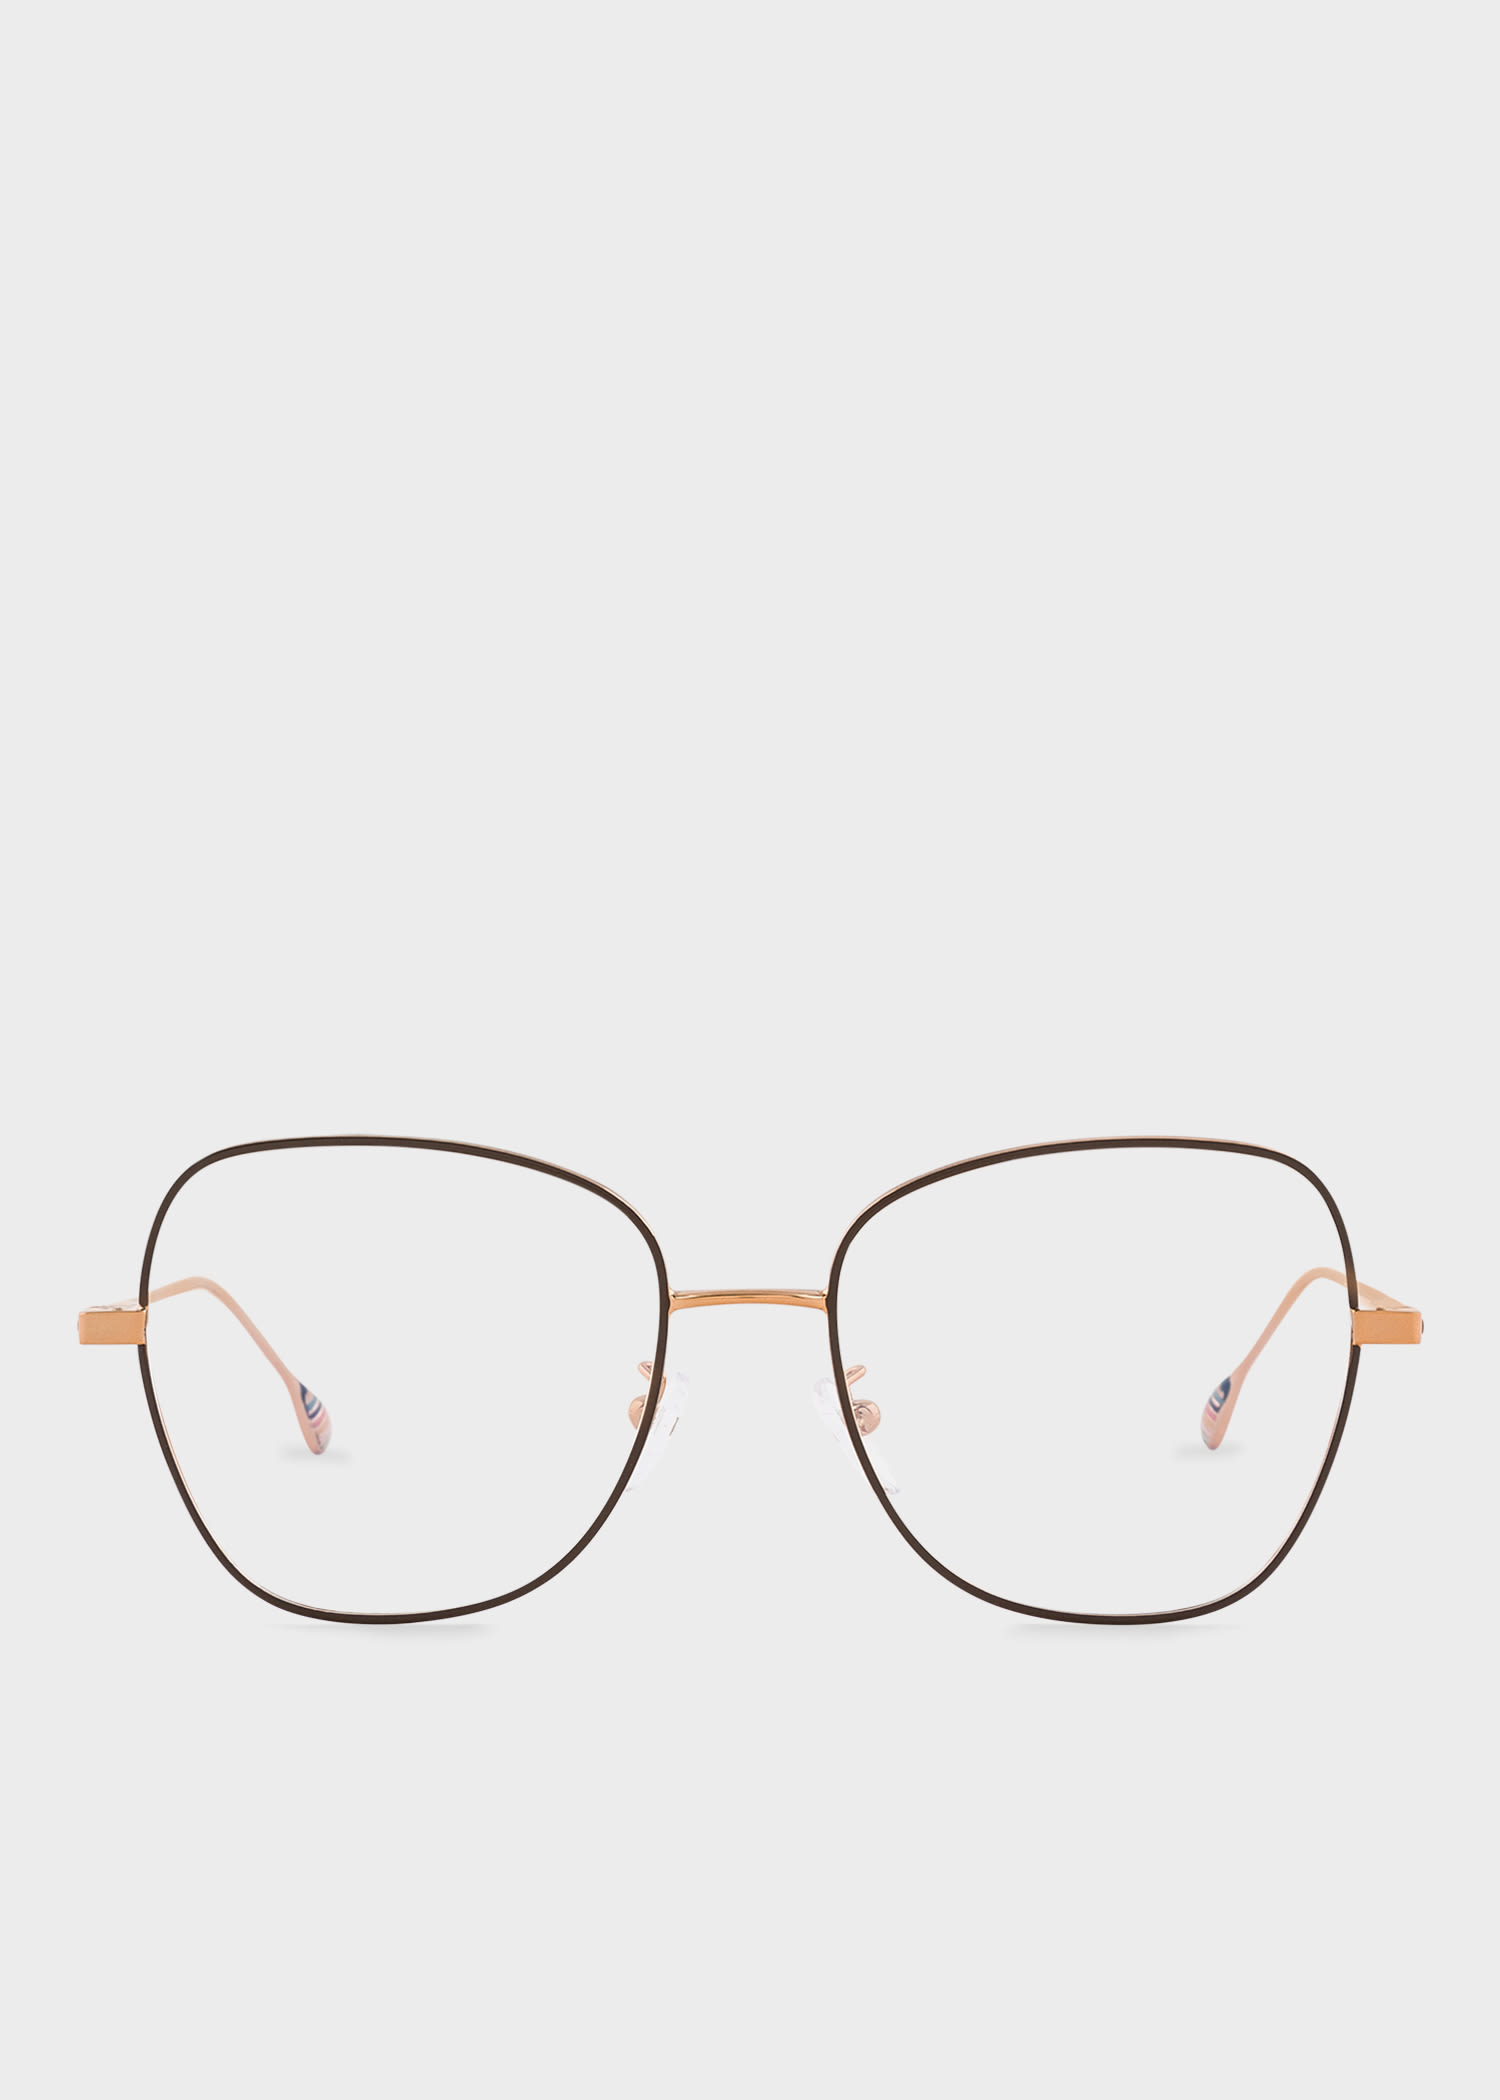 Designer Glasses & Sunglasses - Paul Smith